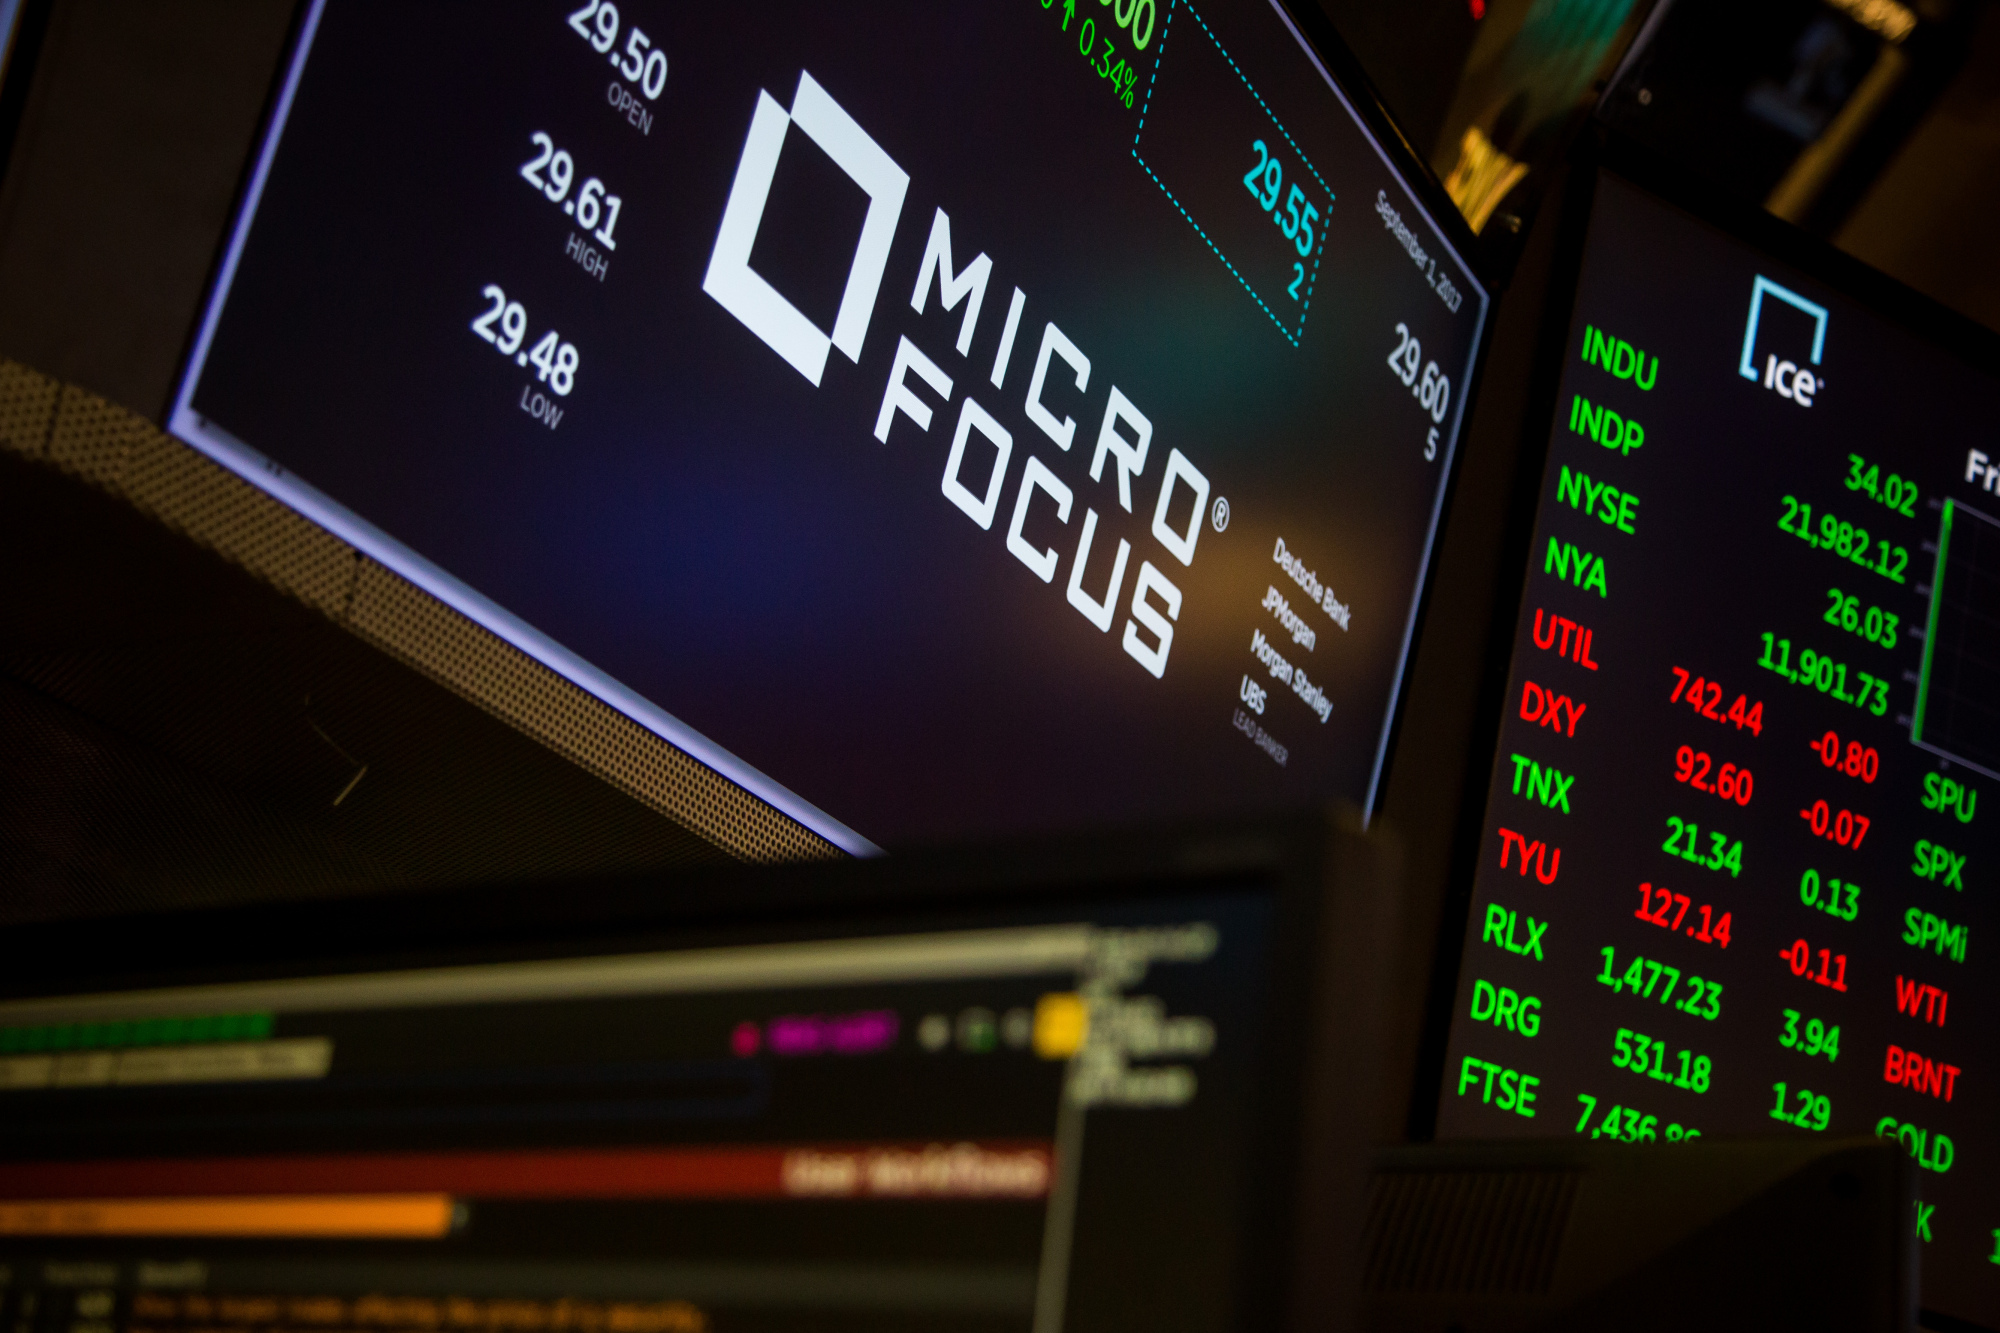 Micro Focus is now OpenText